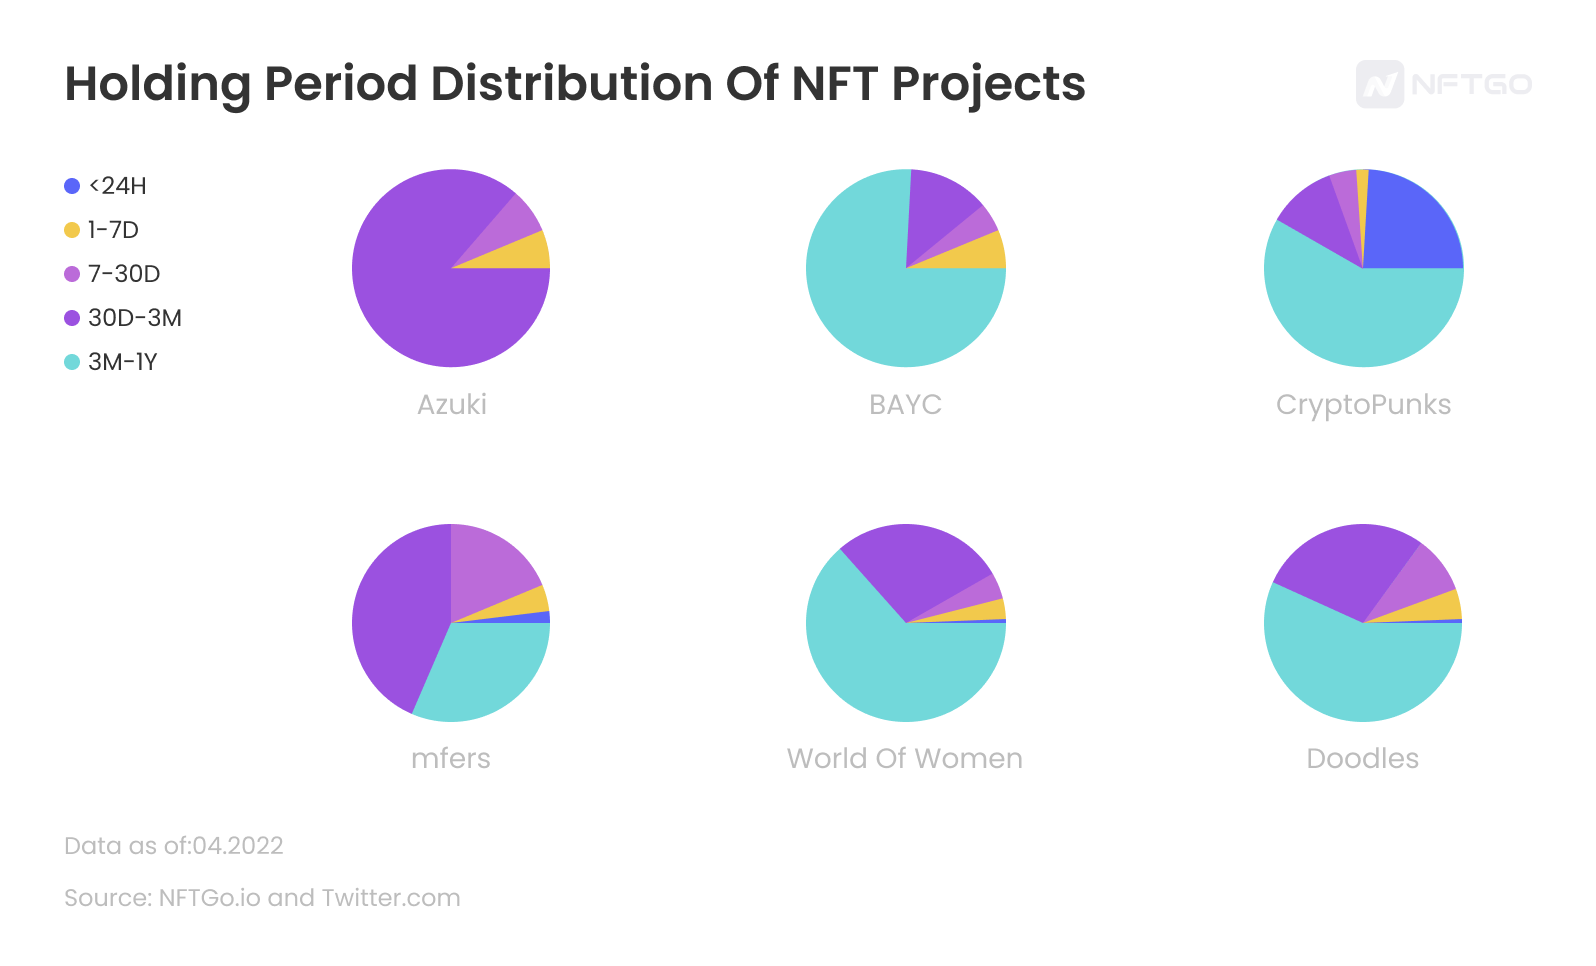 NFT项目的持有期分布统计图；数据来源：NFTGo.io